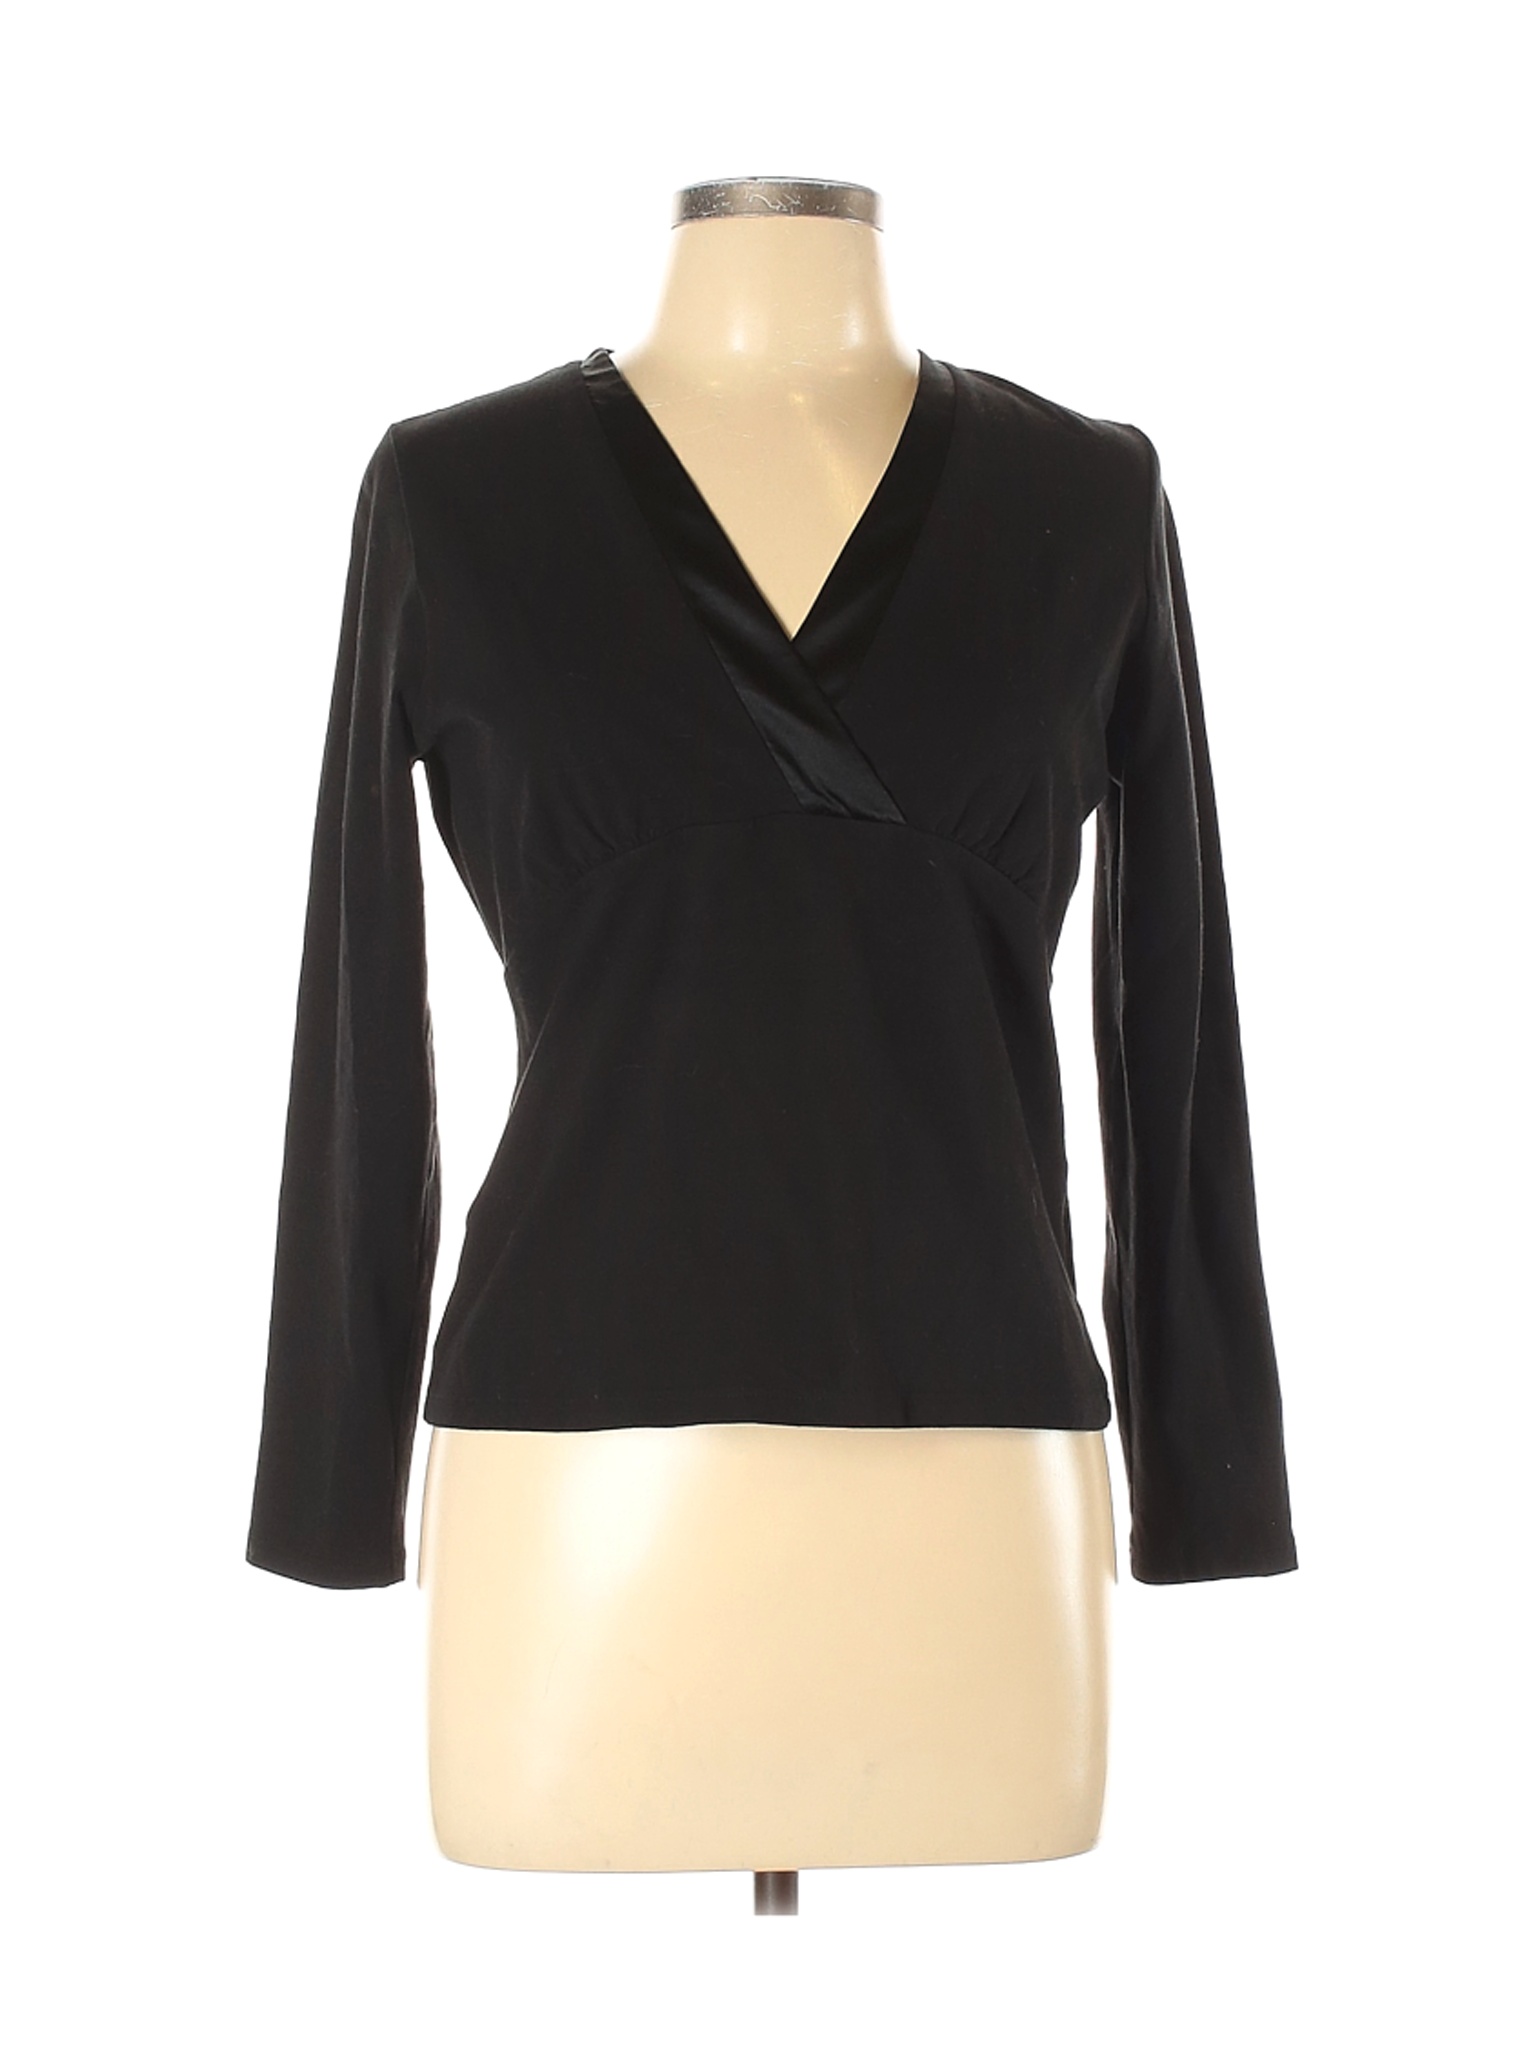 Ann Taylor Women Black Long Sleeve Top L Petites | eBay